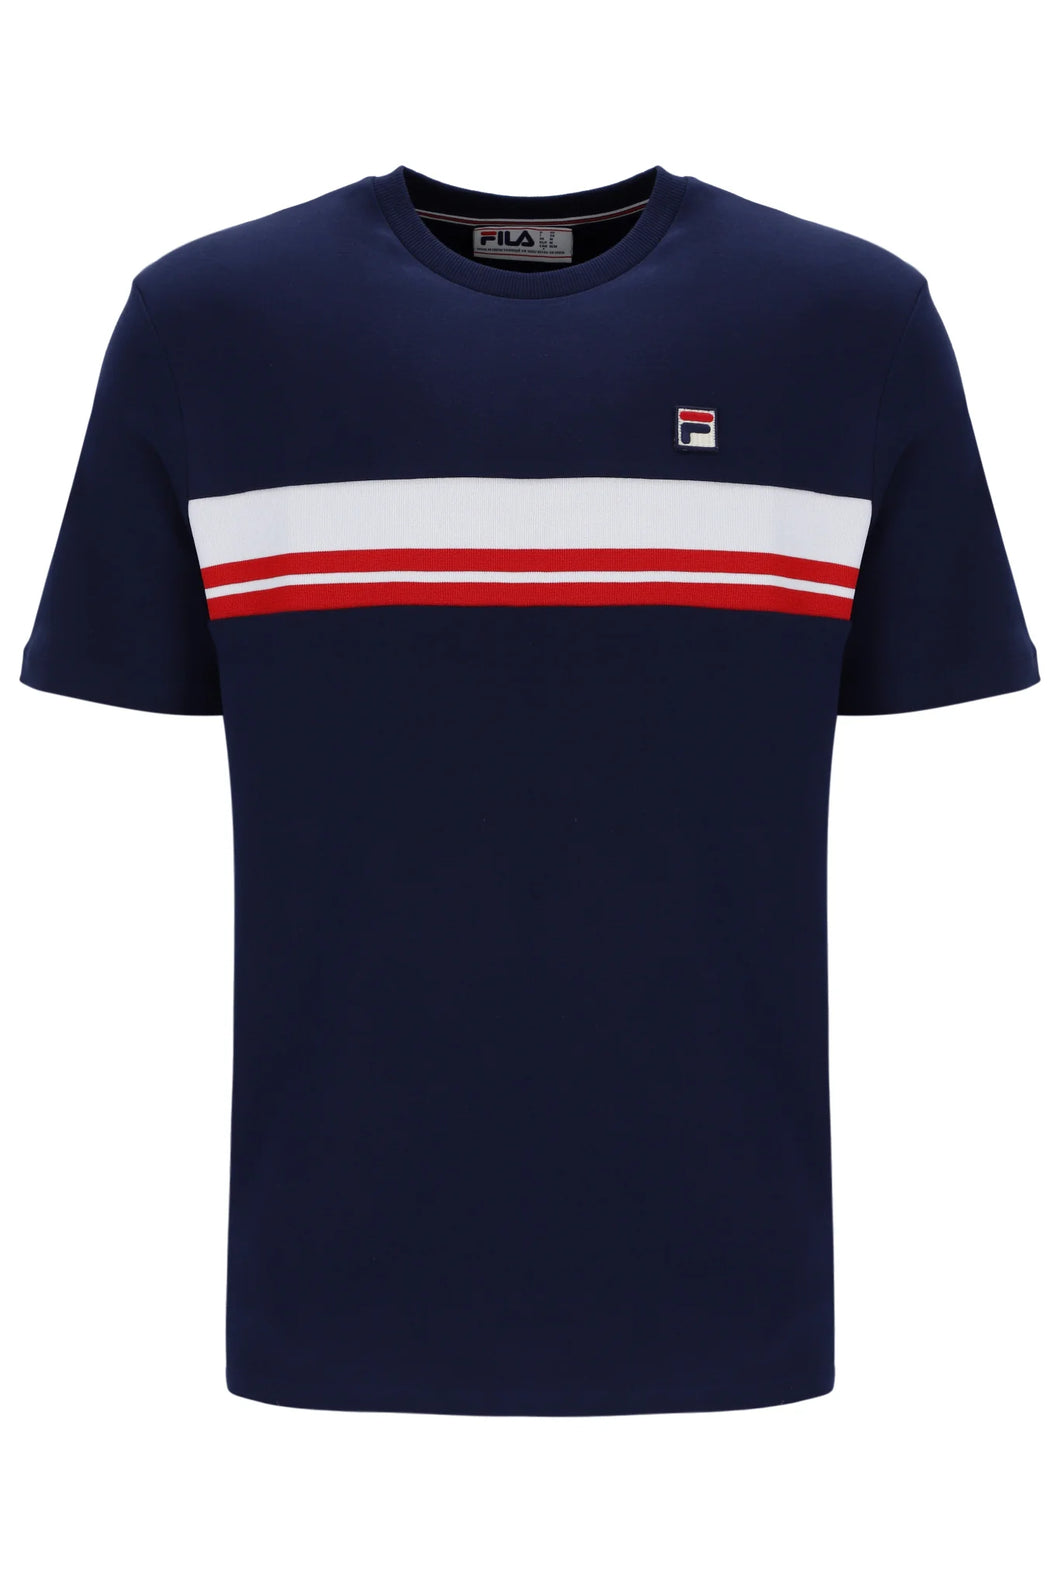 Fila Cooper T-Shirt Navy